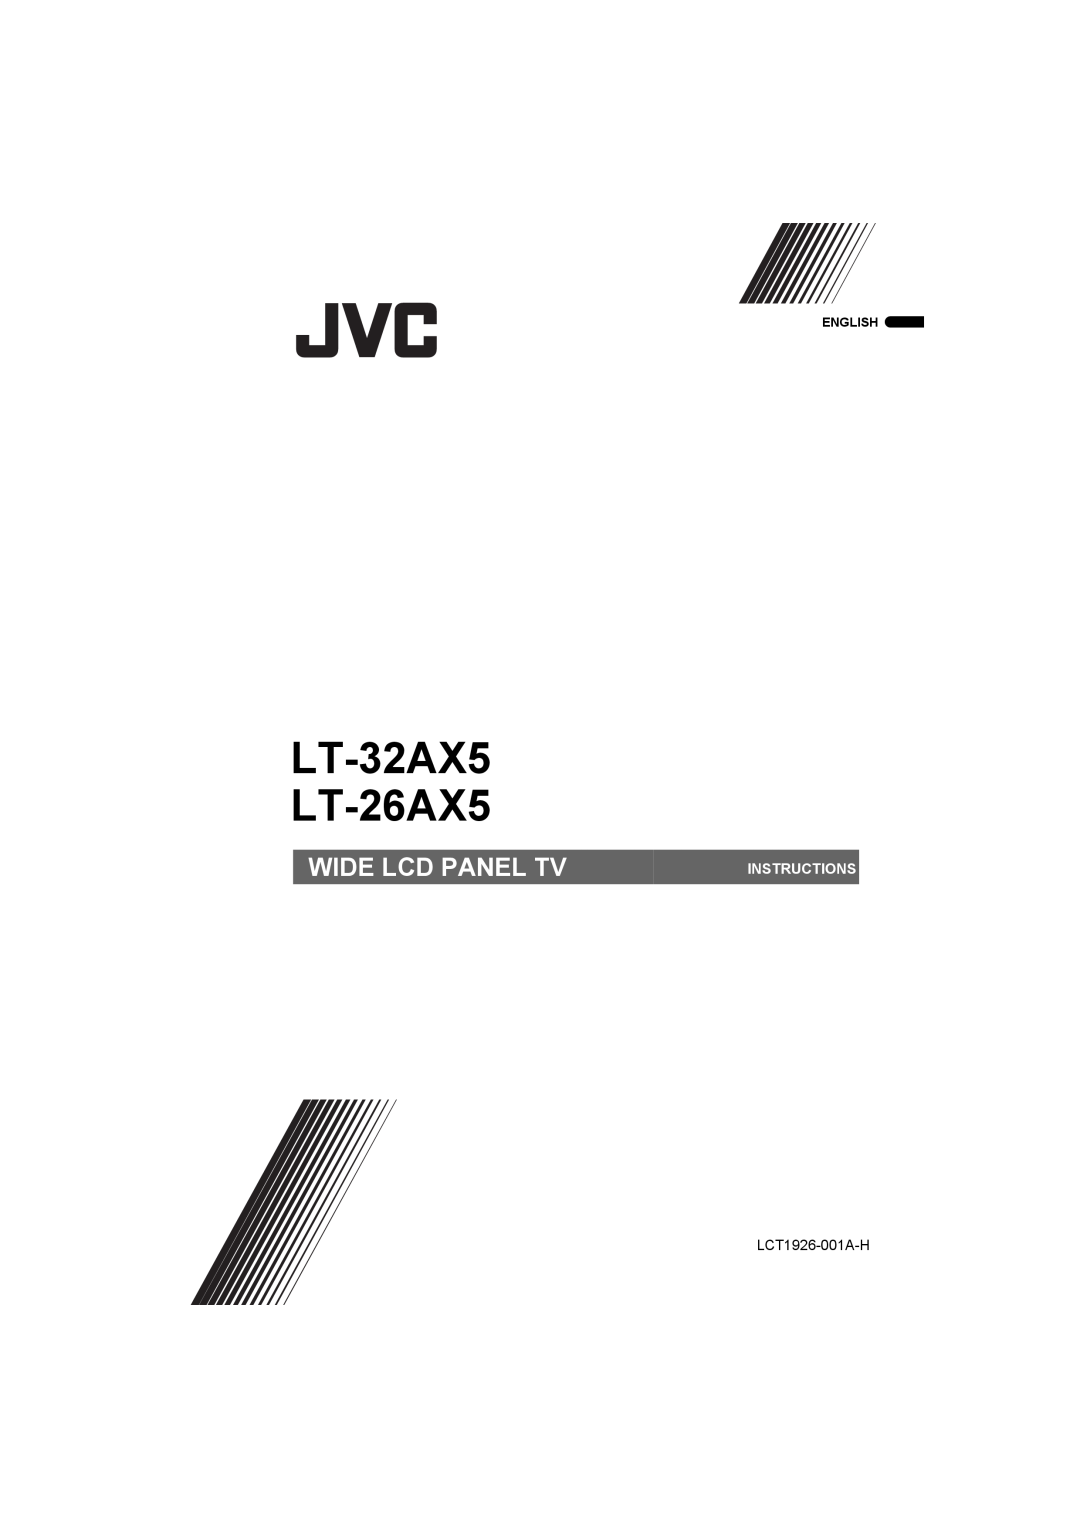 JVC manual LT-32AX5 LT-26AX5, Wide Lcd Panel Tv, Instructions, English 